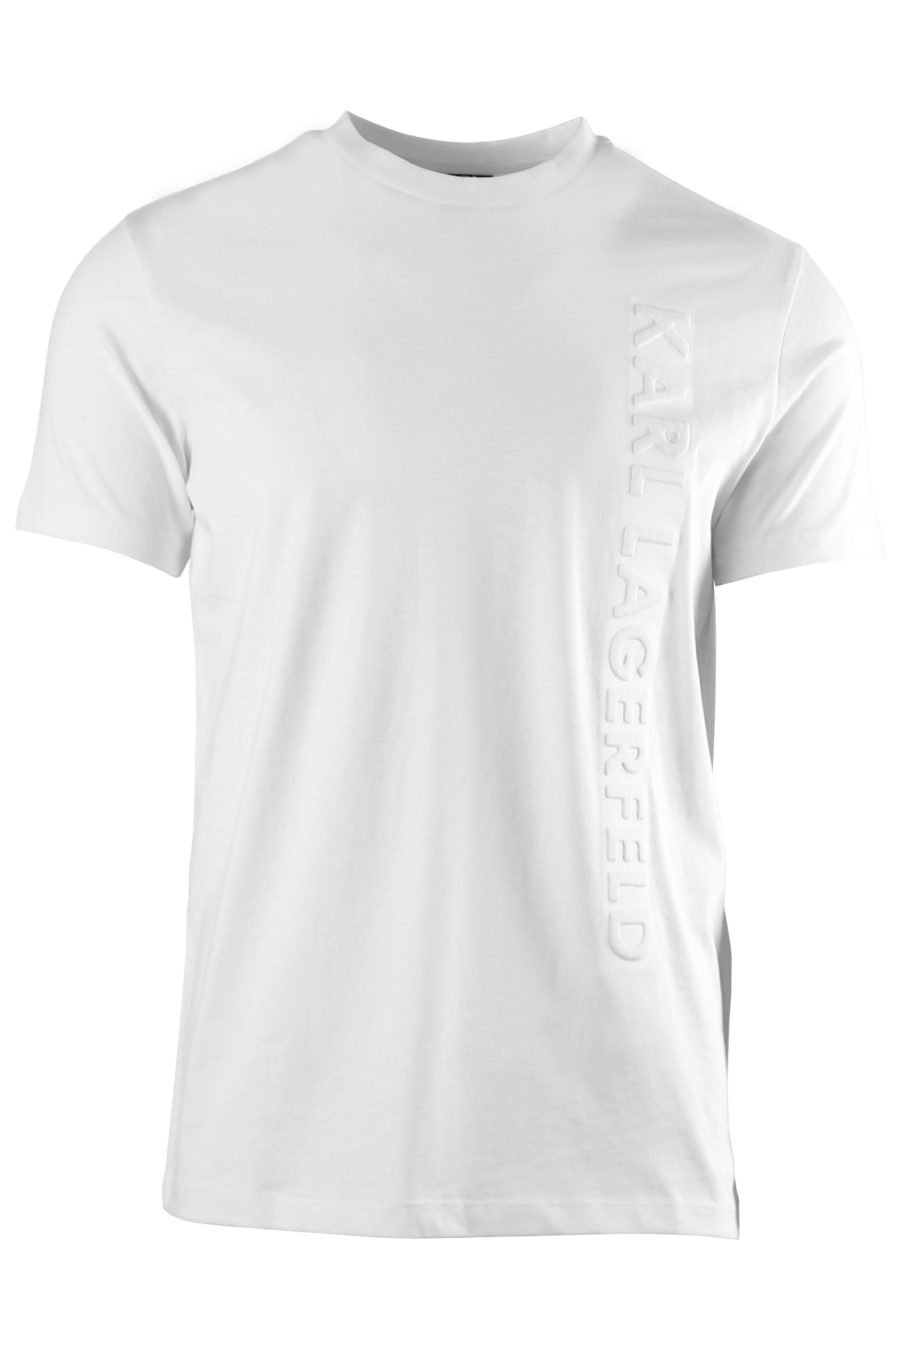 Camiseta blanca con logotipo lateral en relieve - IMG 0582 m